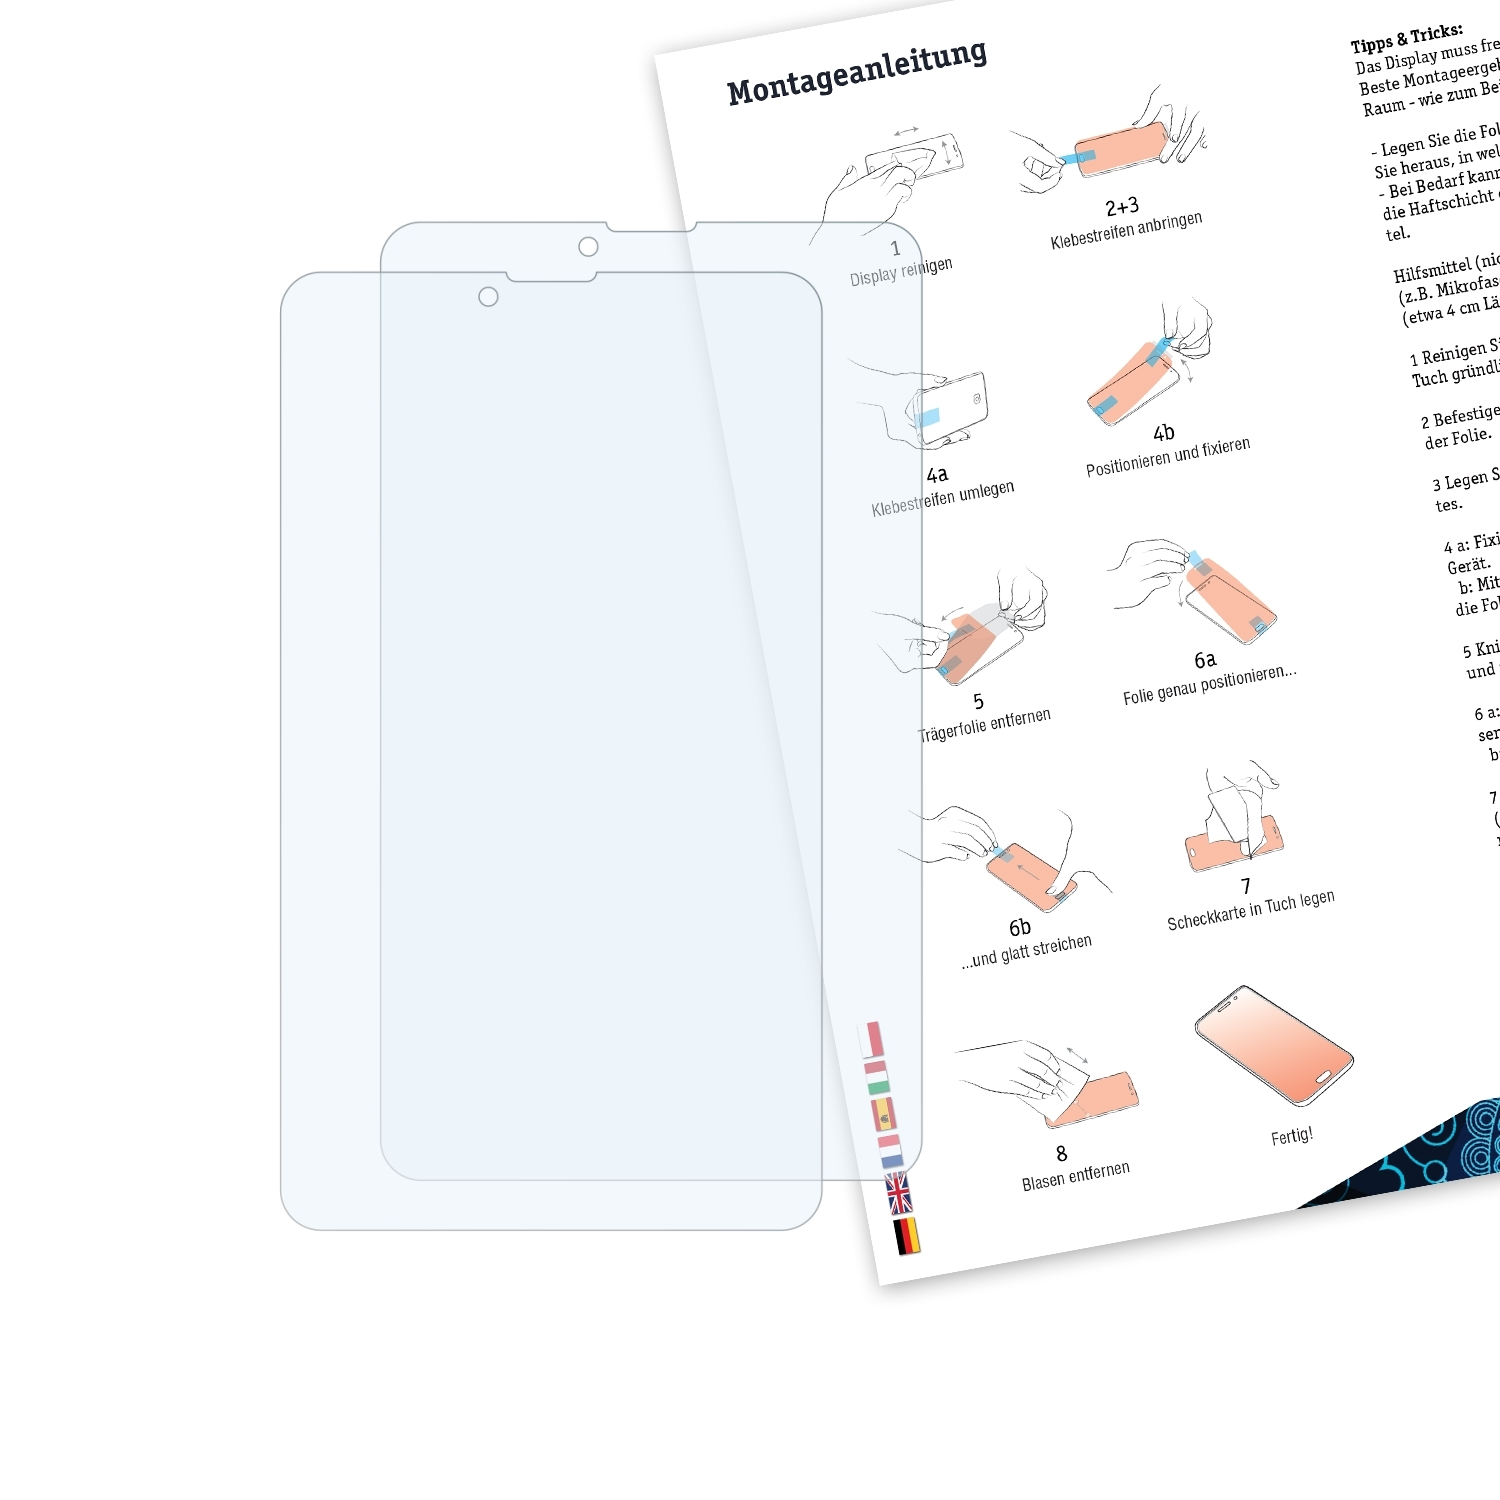 BRUNI 2x Basics-Clear JAY-tech Tablet-PC XTE7D) Schutzfolie(für